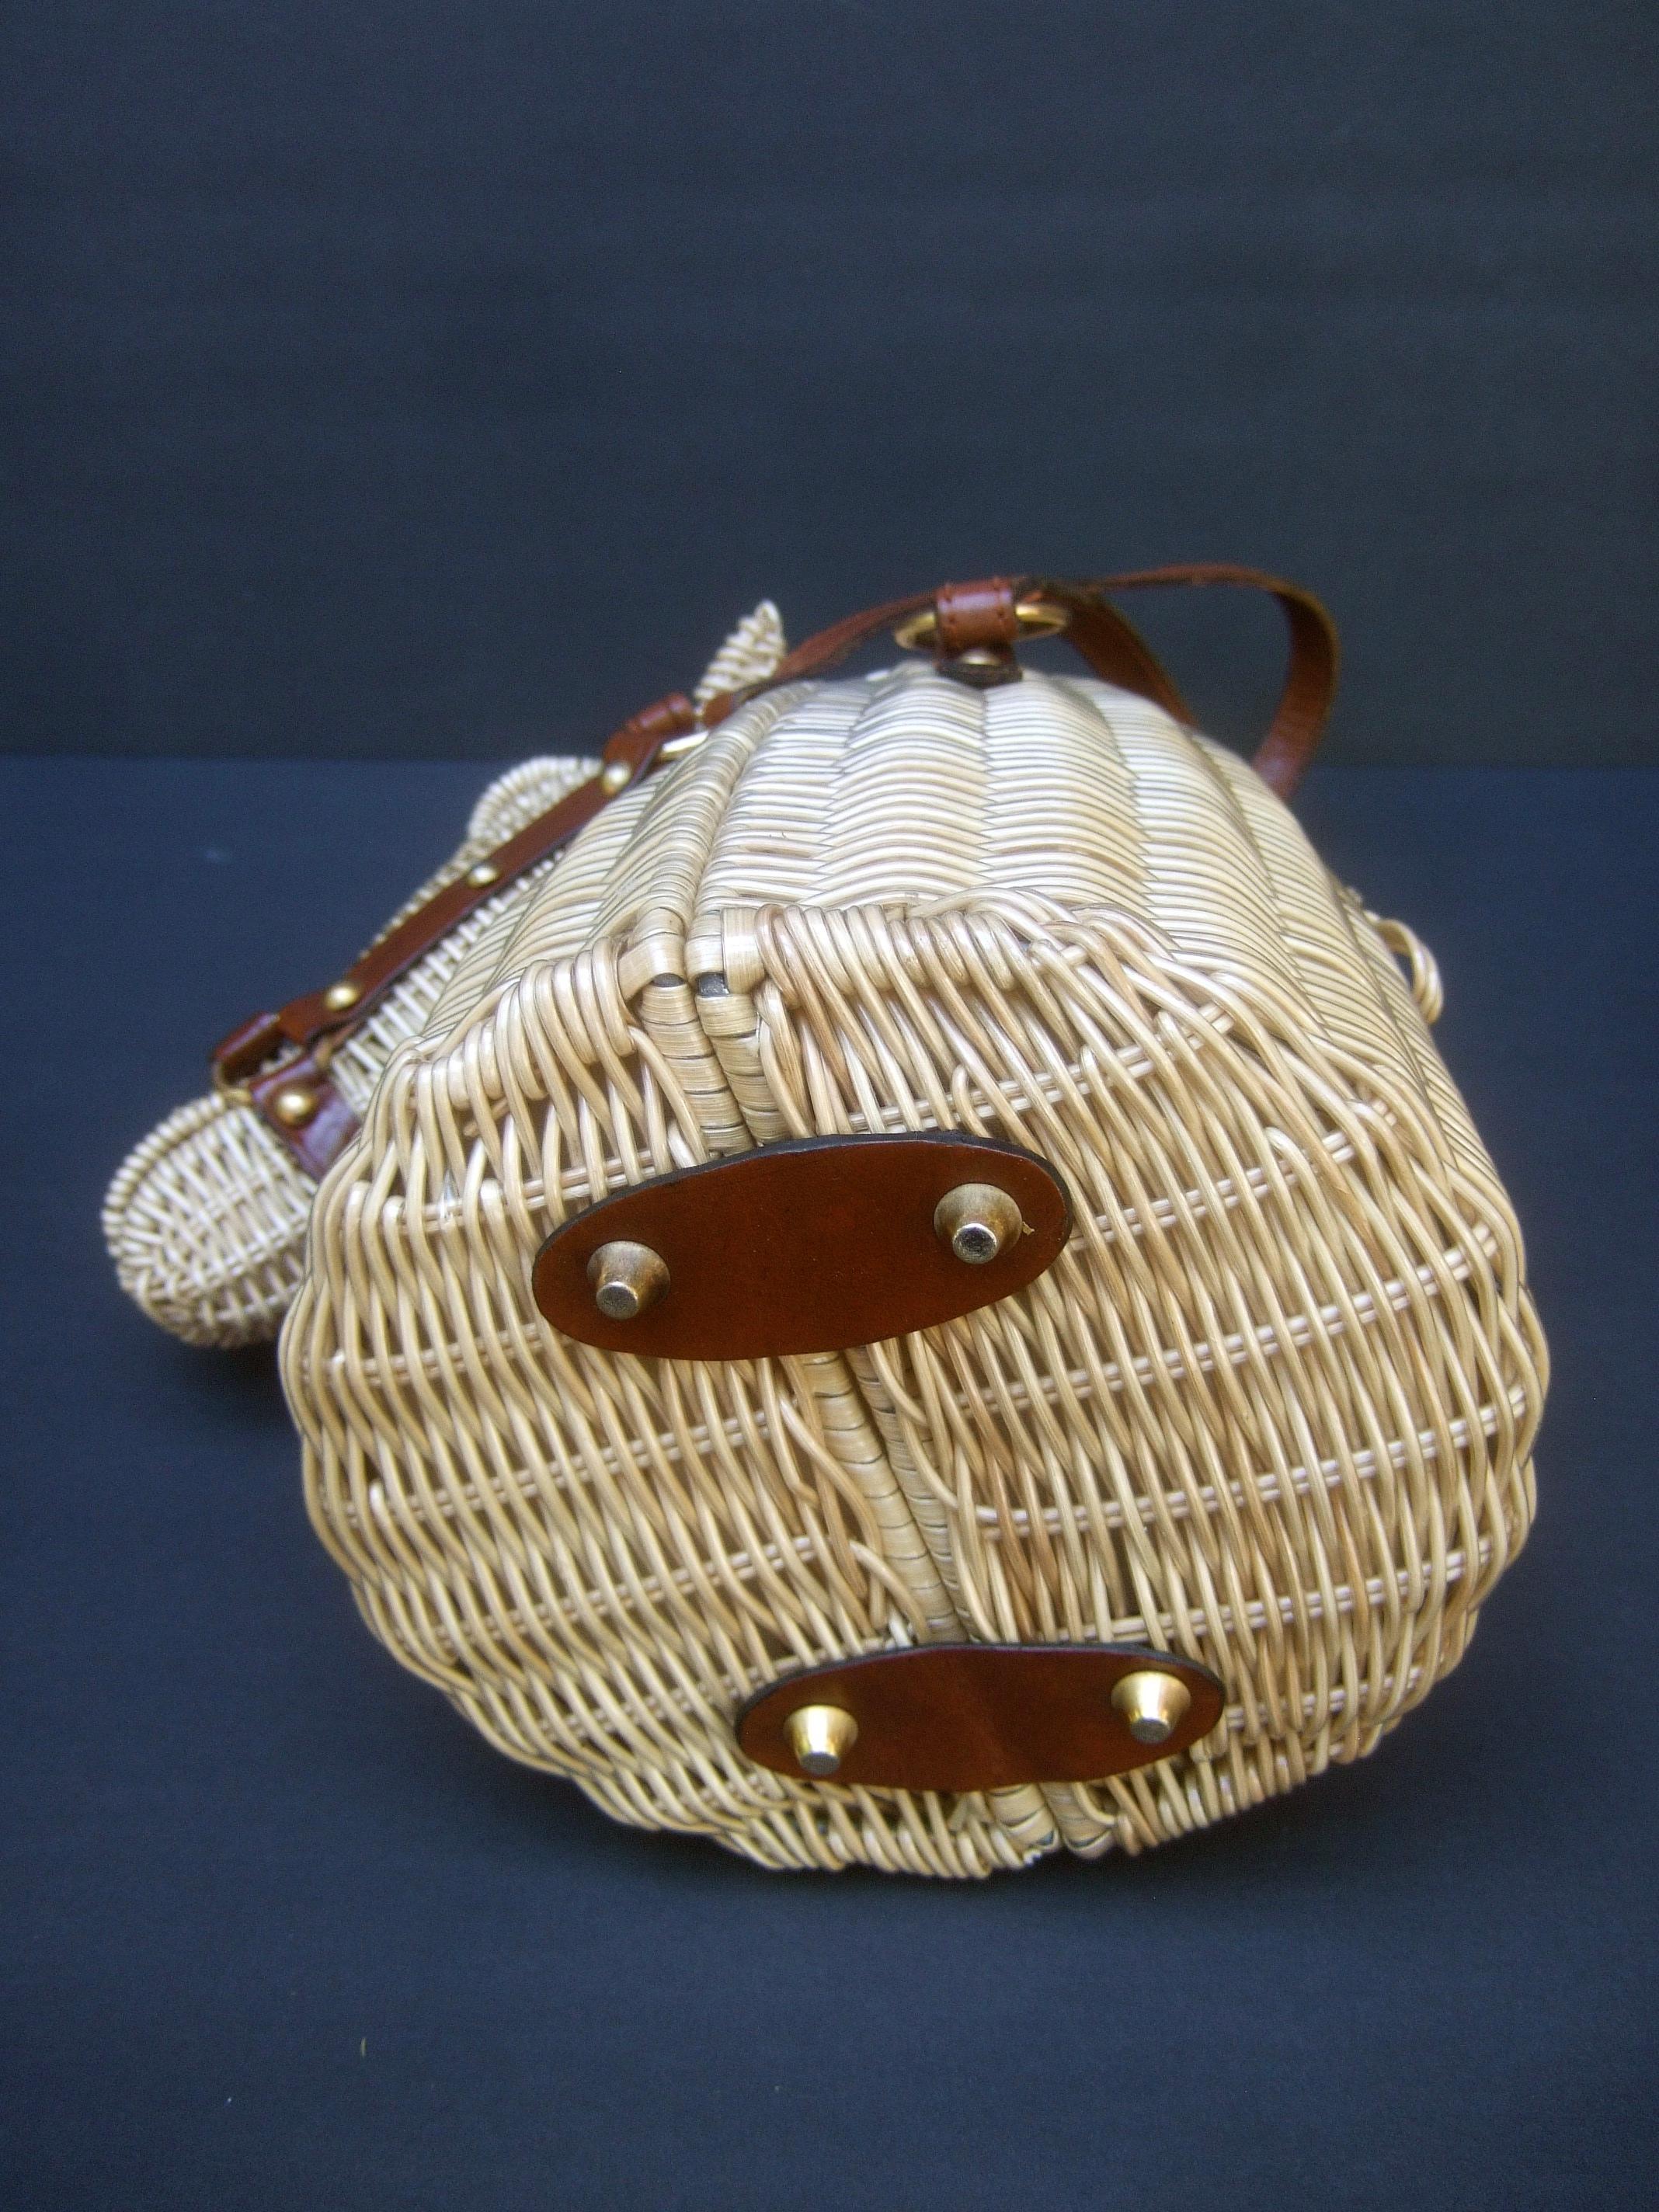 Extremely Rare Figural Wicker Artisan Horse Design Handbag c 1970 12